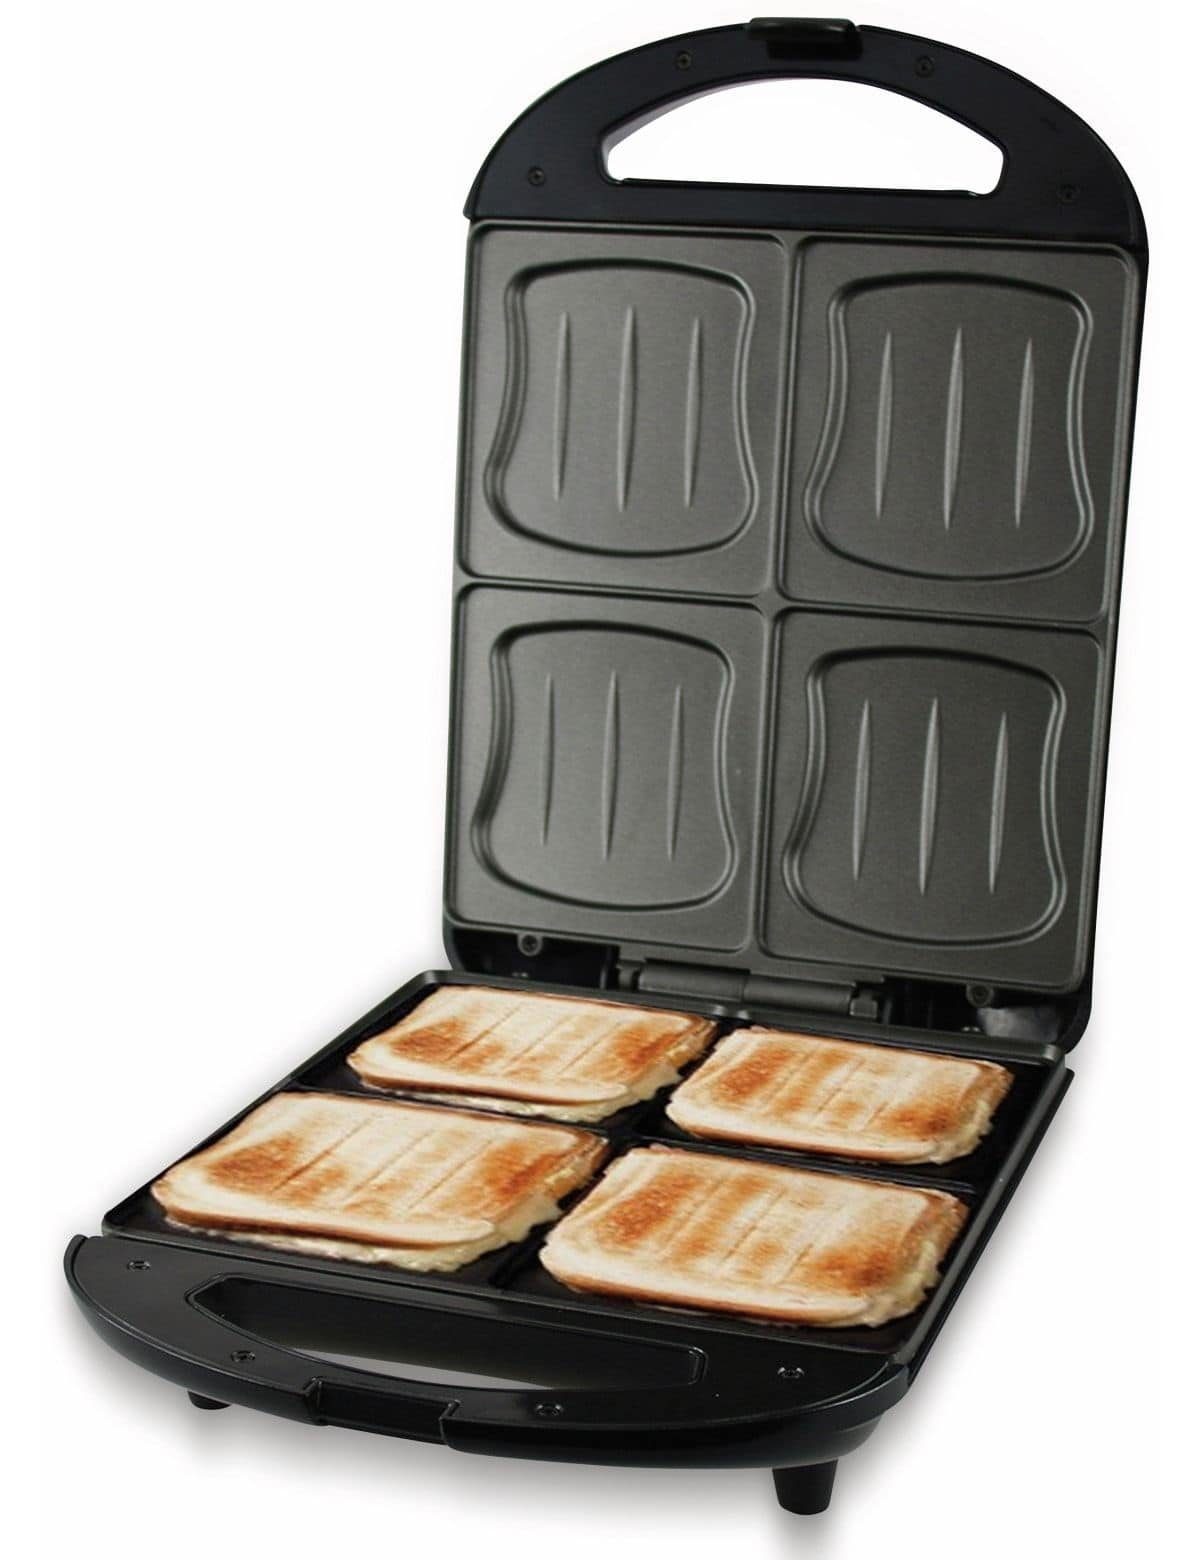 ST-111153, 1300 Sandwichmaker Emerio W Toaster EMERIO